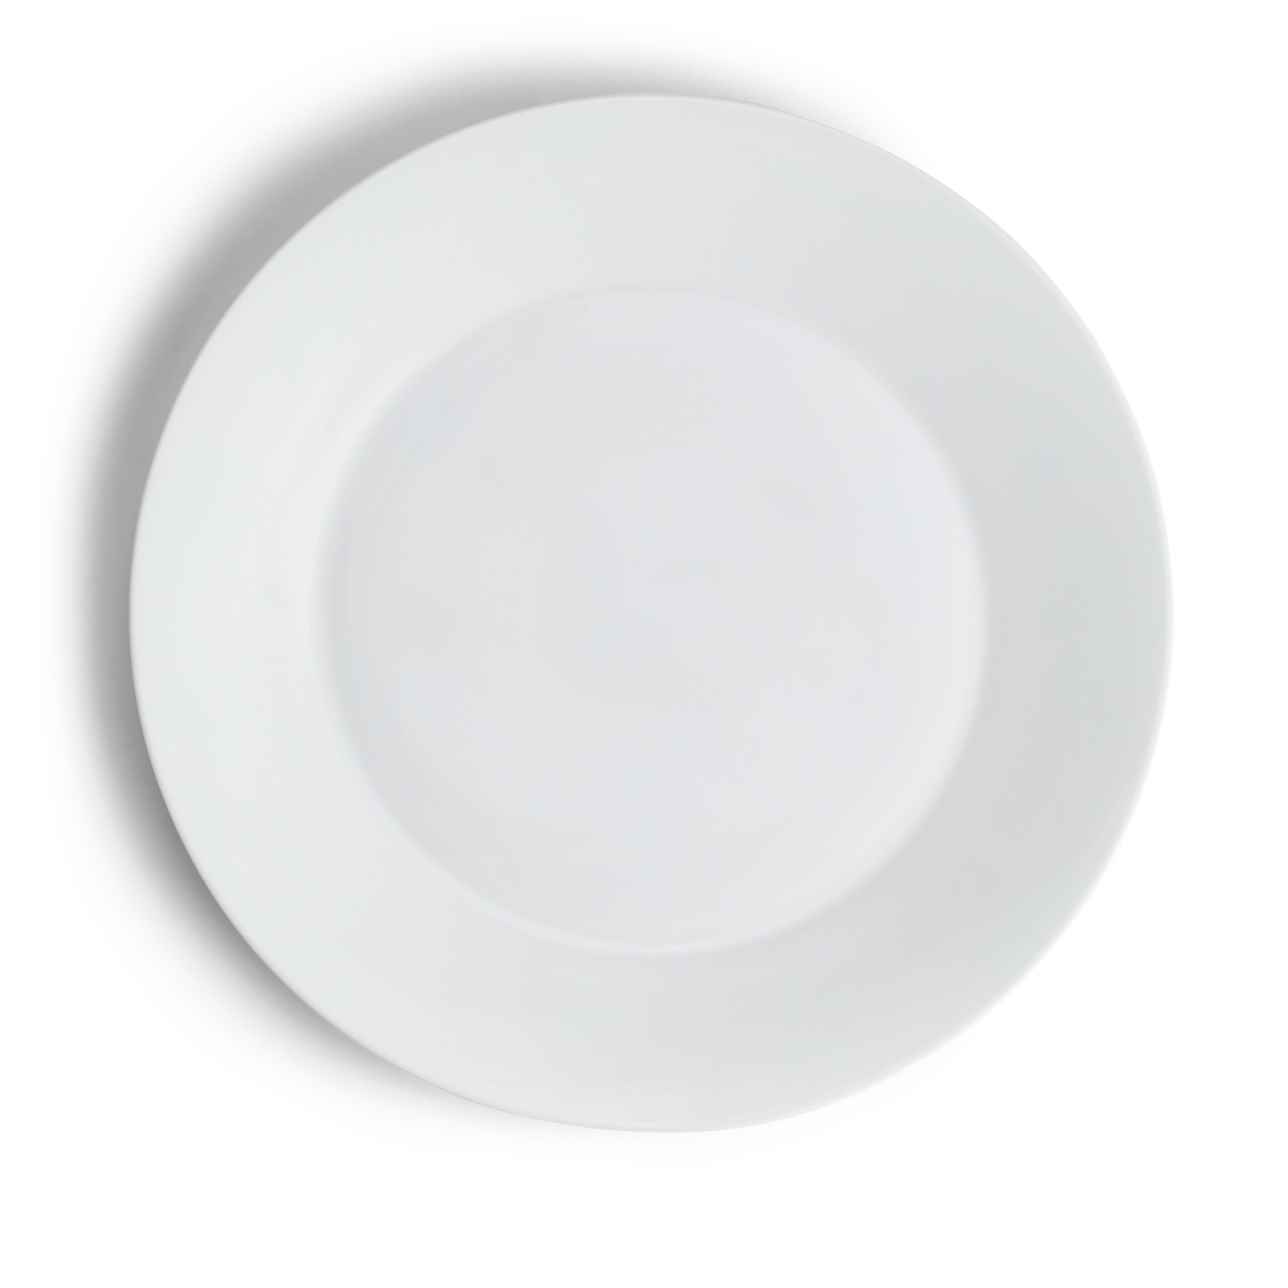 Jasper Conran White Dinner Plate 27cm